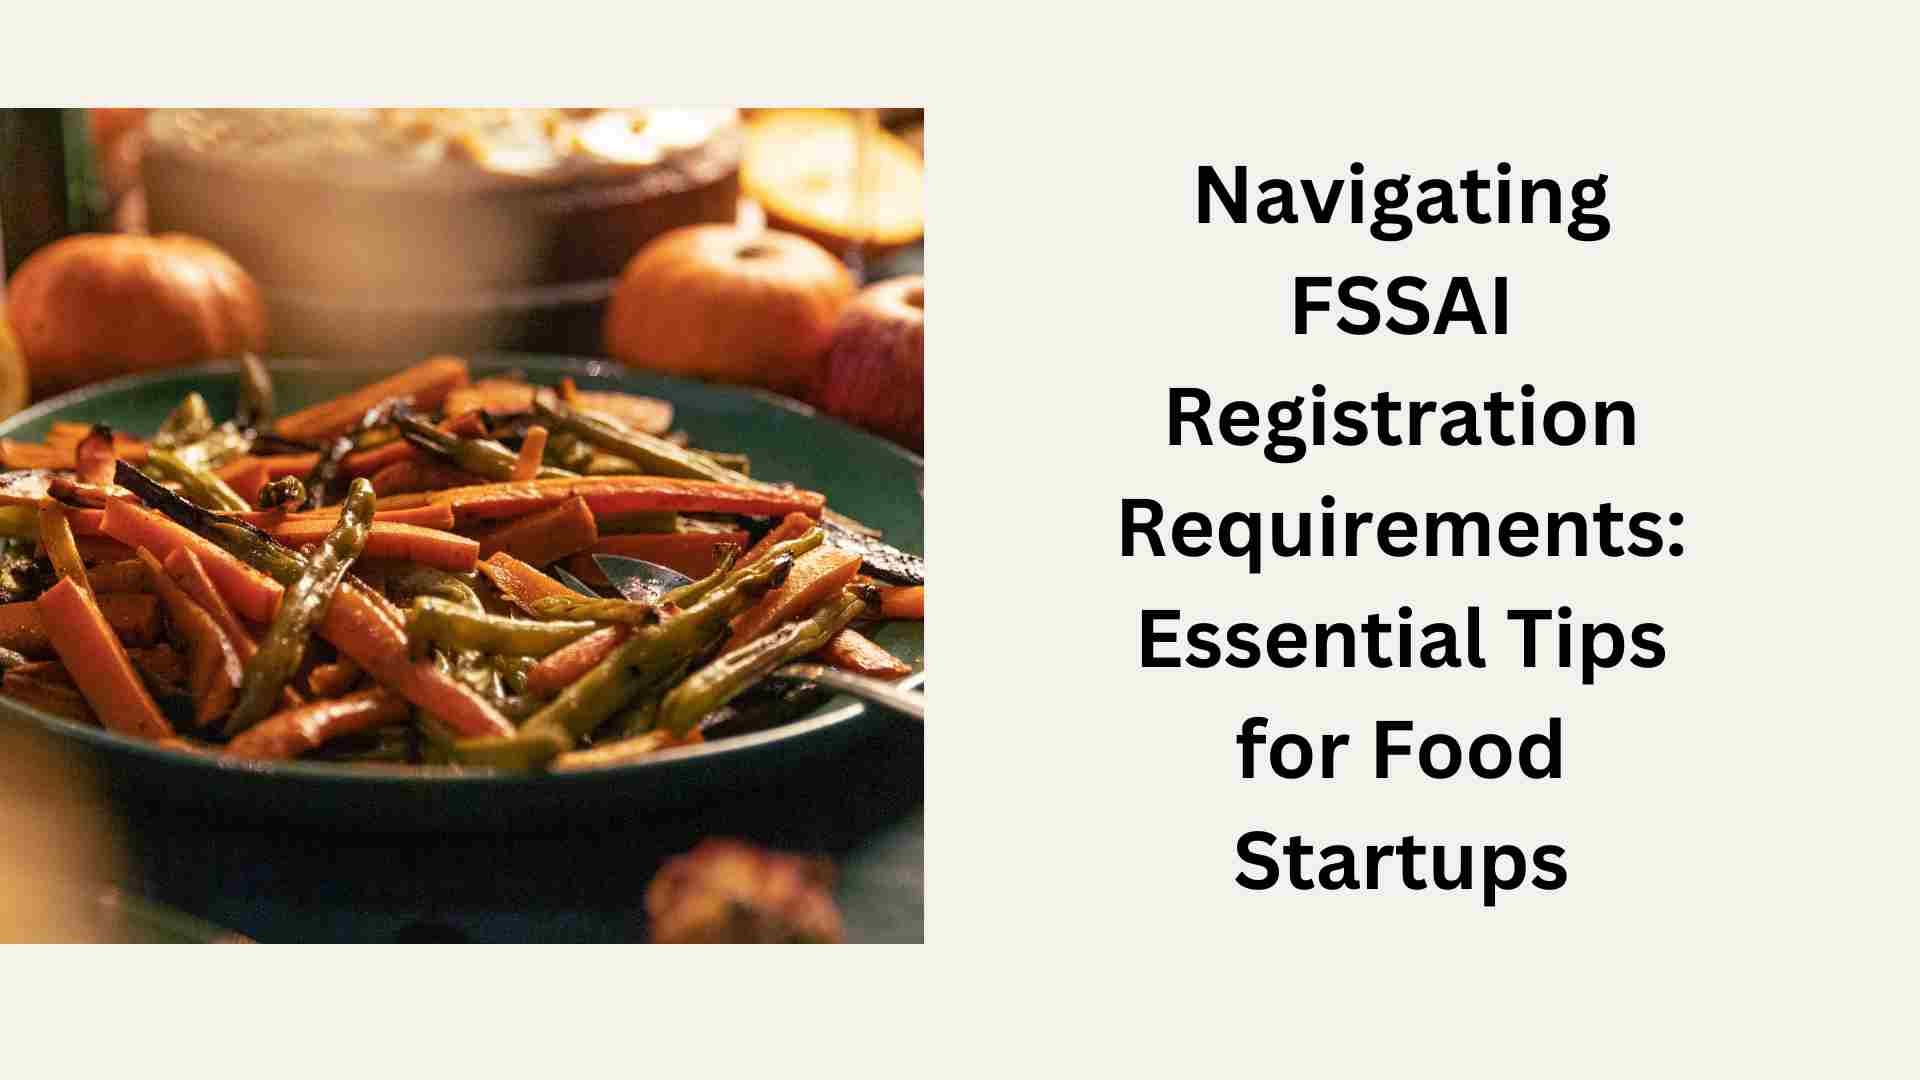 Navigating FSSAI Registration Requirements: Essential Tips for Food Startups